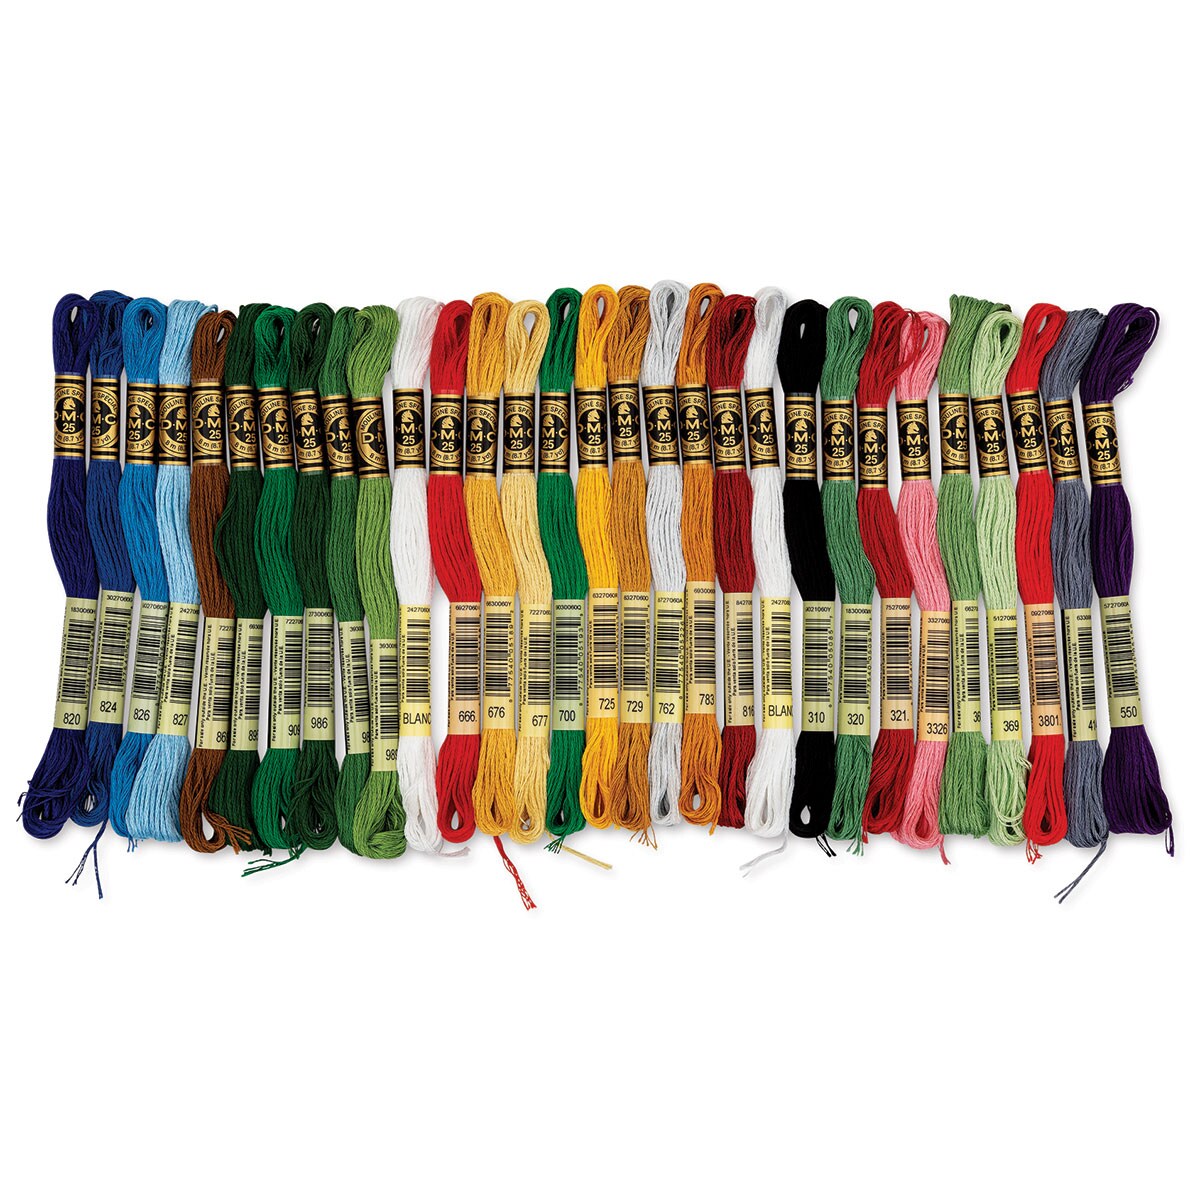 DMC Cotton Embroidery Floss - Holiday Decor, Set of 30